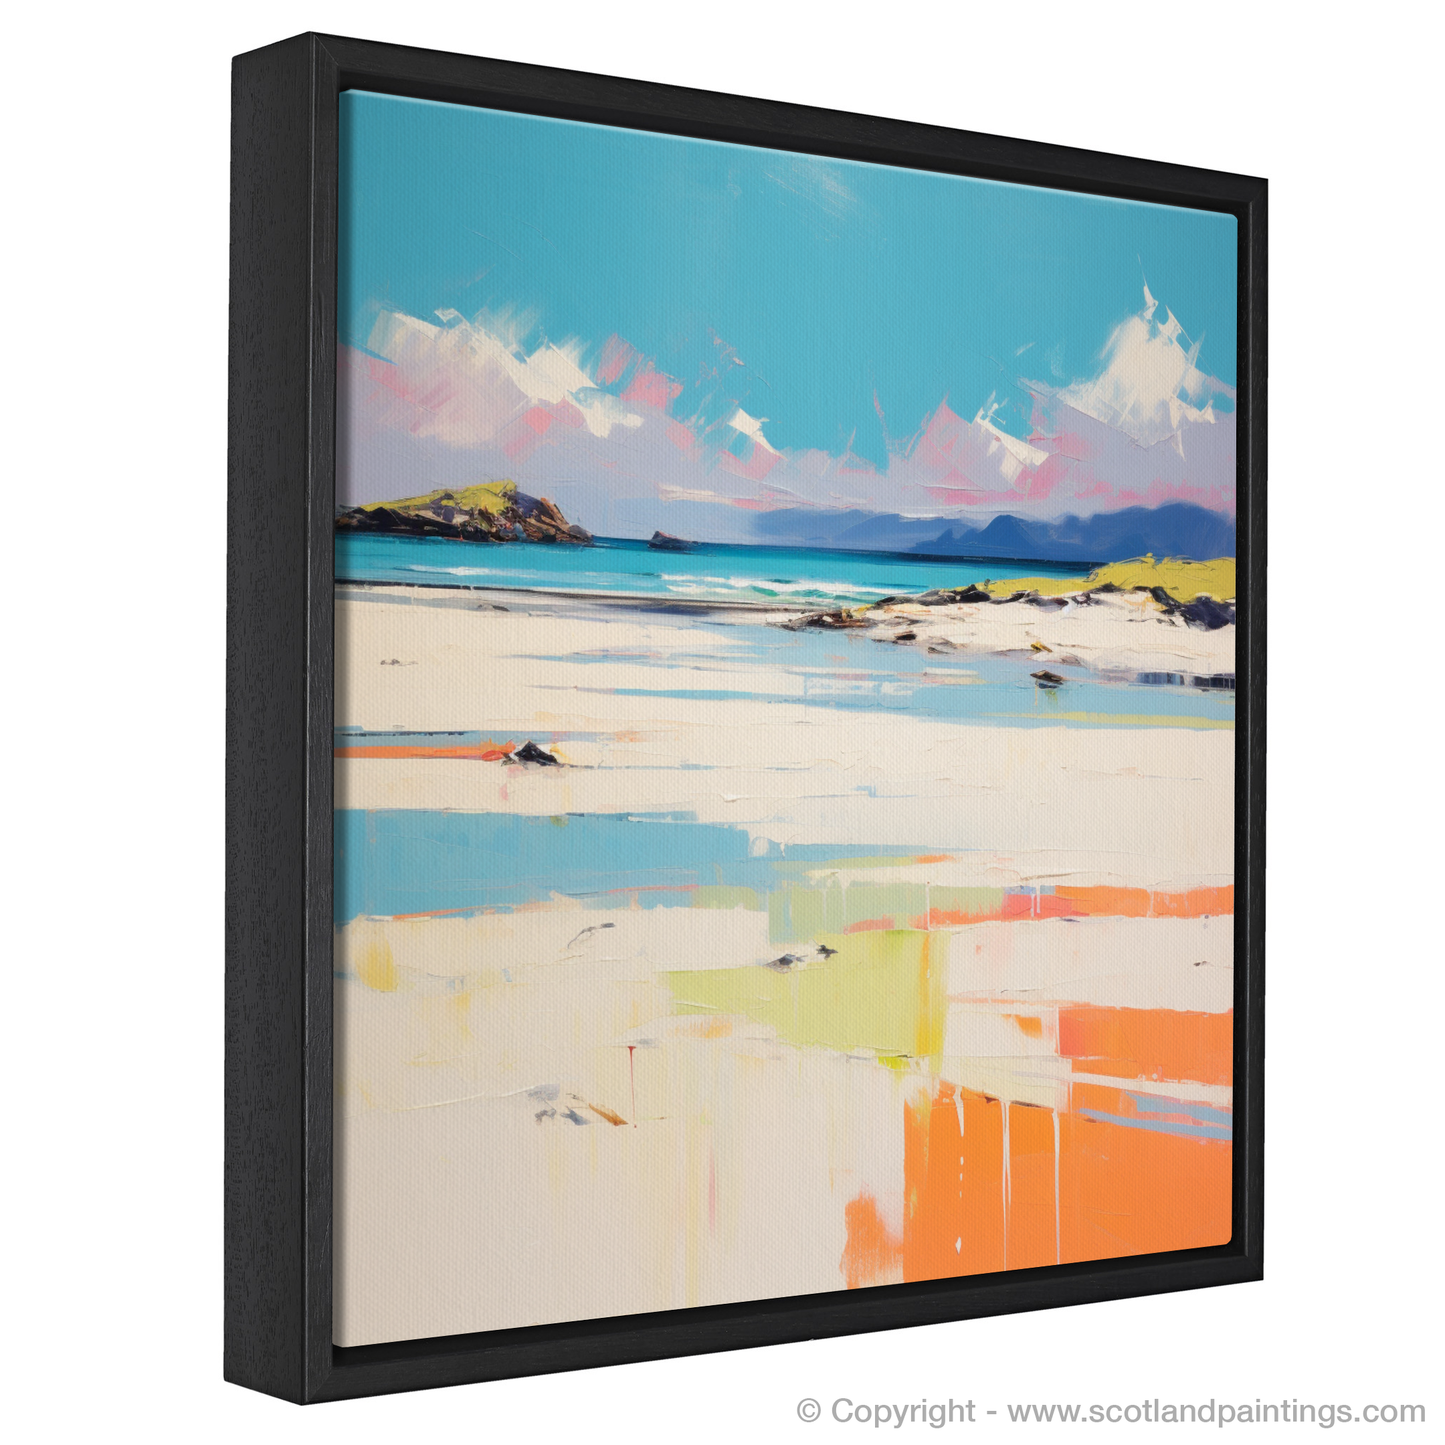 Painting and Art Print of Camusdarach Beach, Arisaig entitled "Camusdarach Beach: A Contemporary Ode to Scotland's Seaside Splendour".